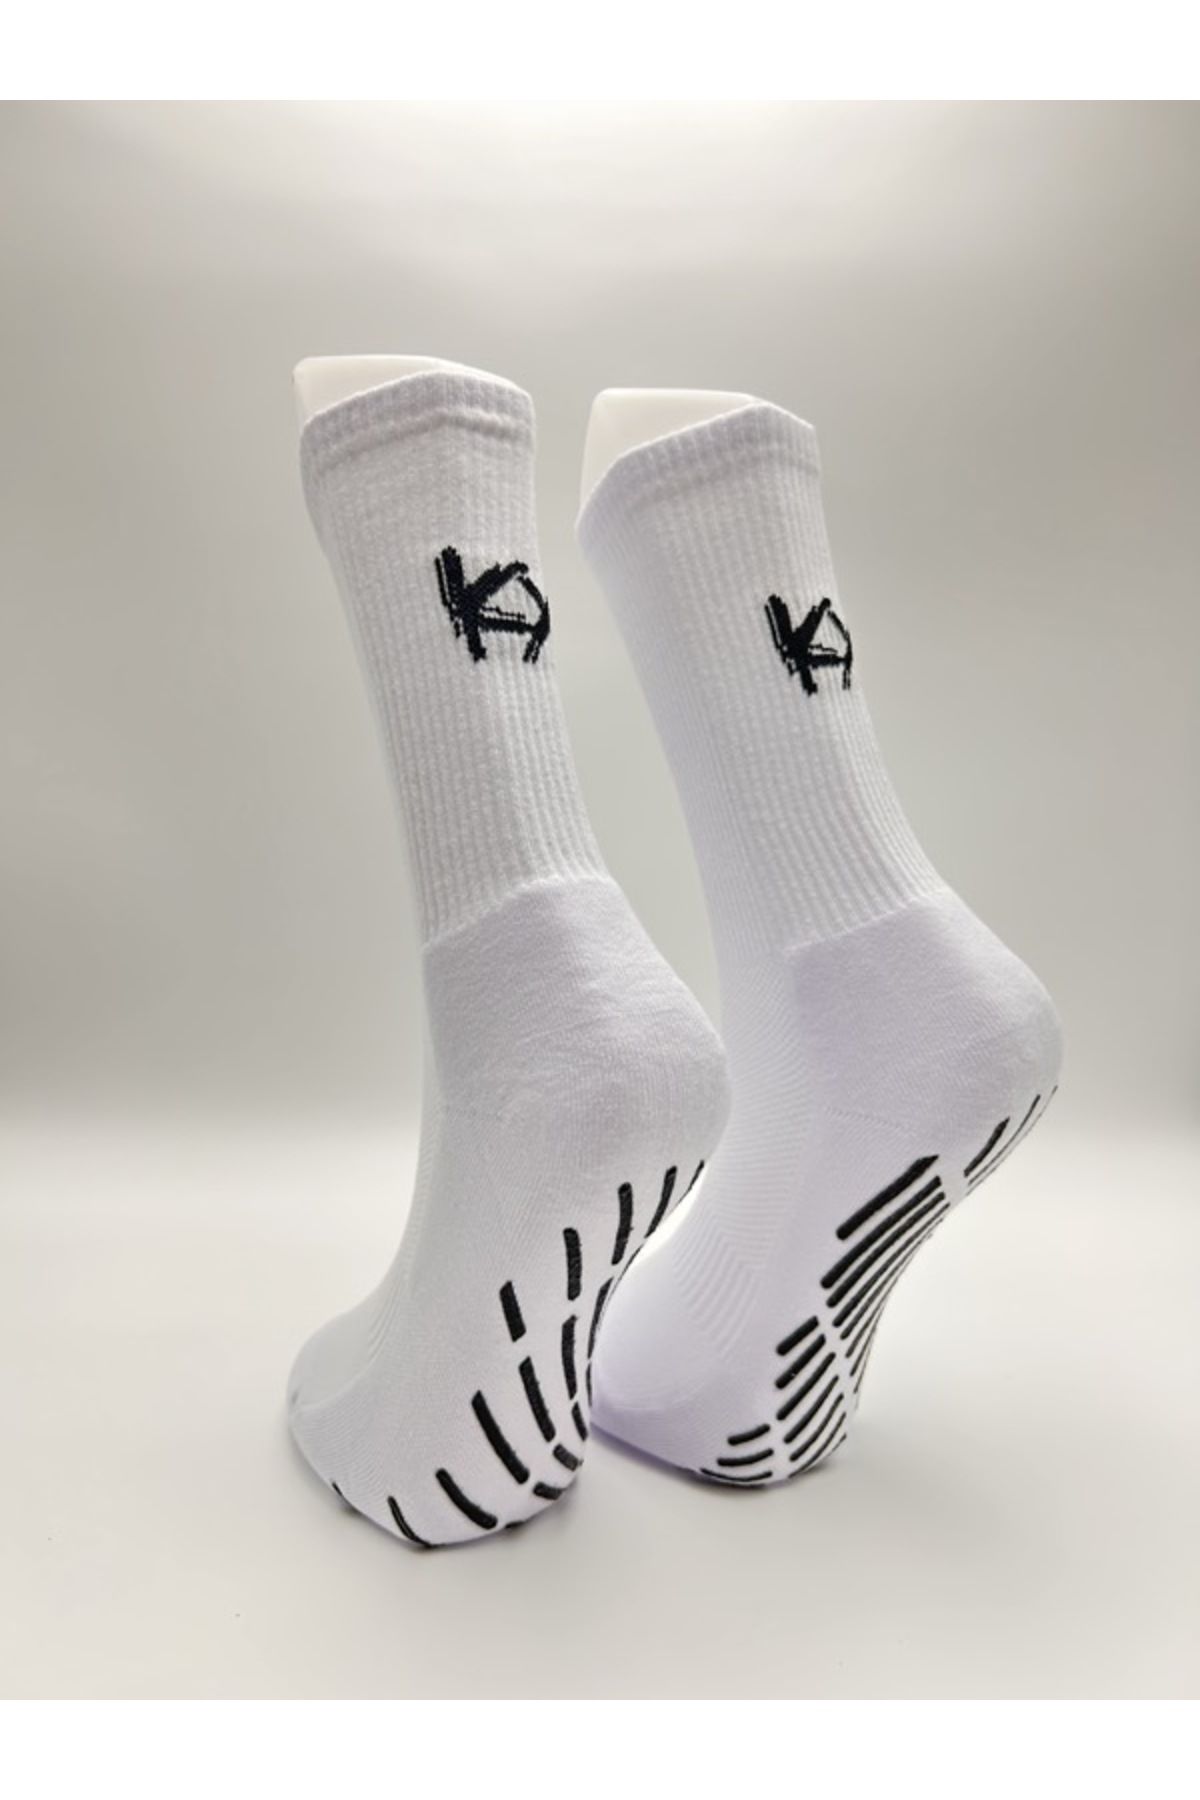 KXSPOR Kxpro Kaymaz Taban Futbol Çorabı - Futbol Çorabı - Kaymaz Çorap